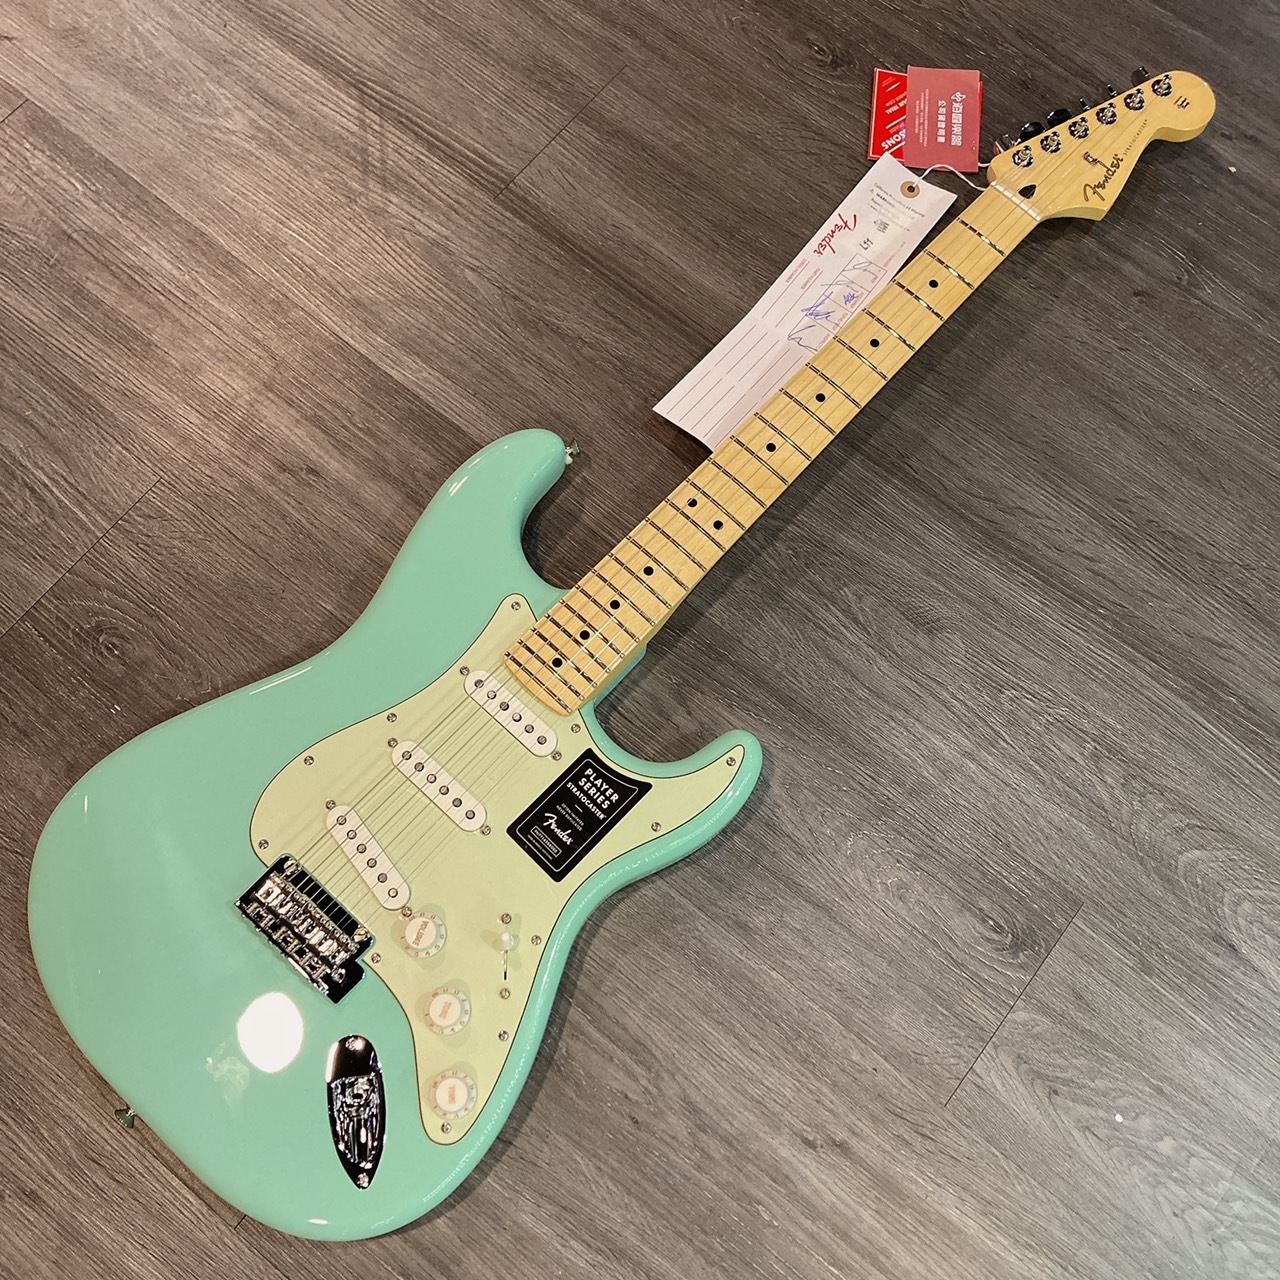 Fender player strat surf green LTD 衝浪綠限量電吉他